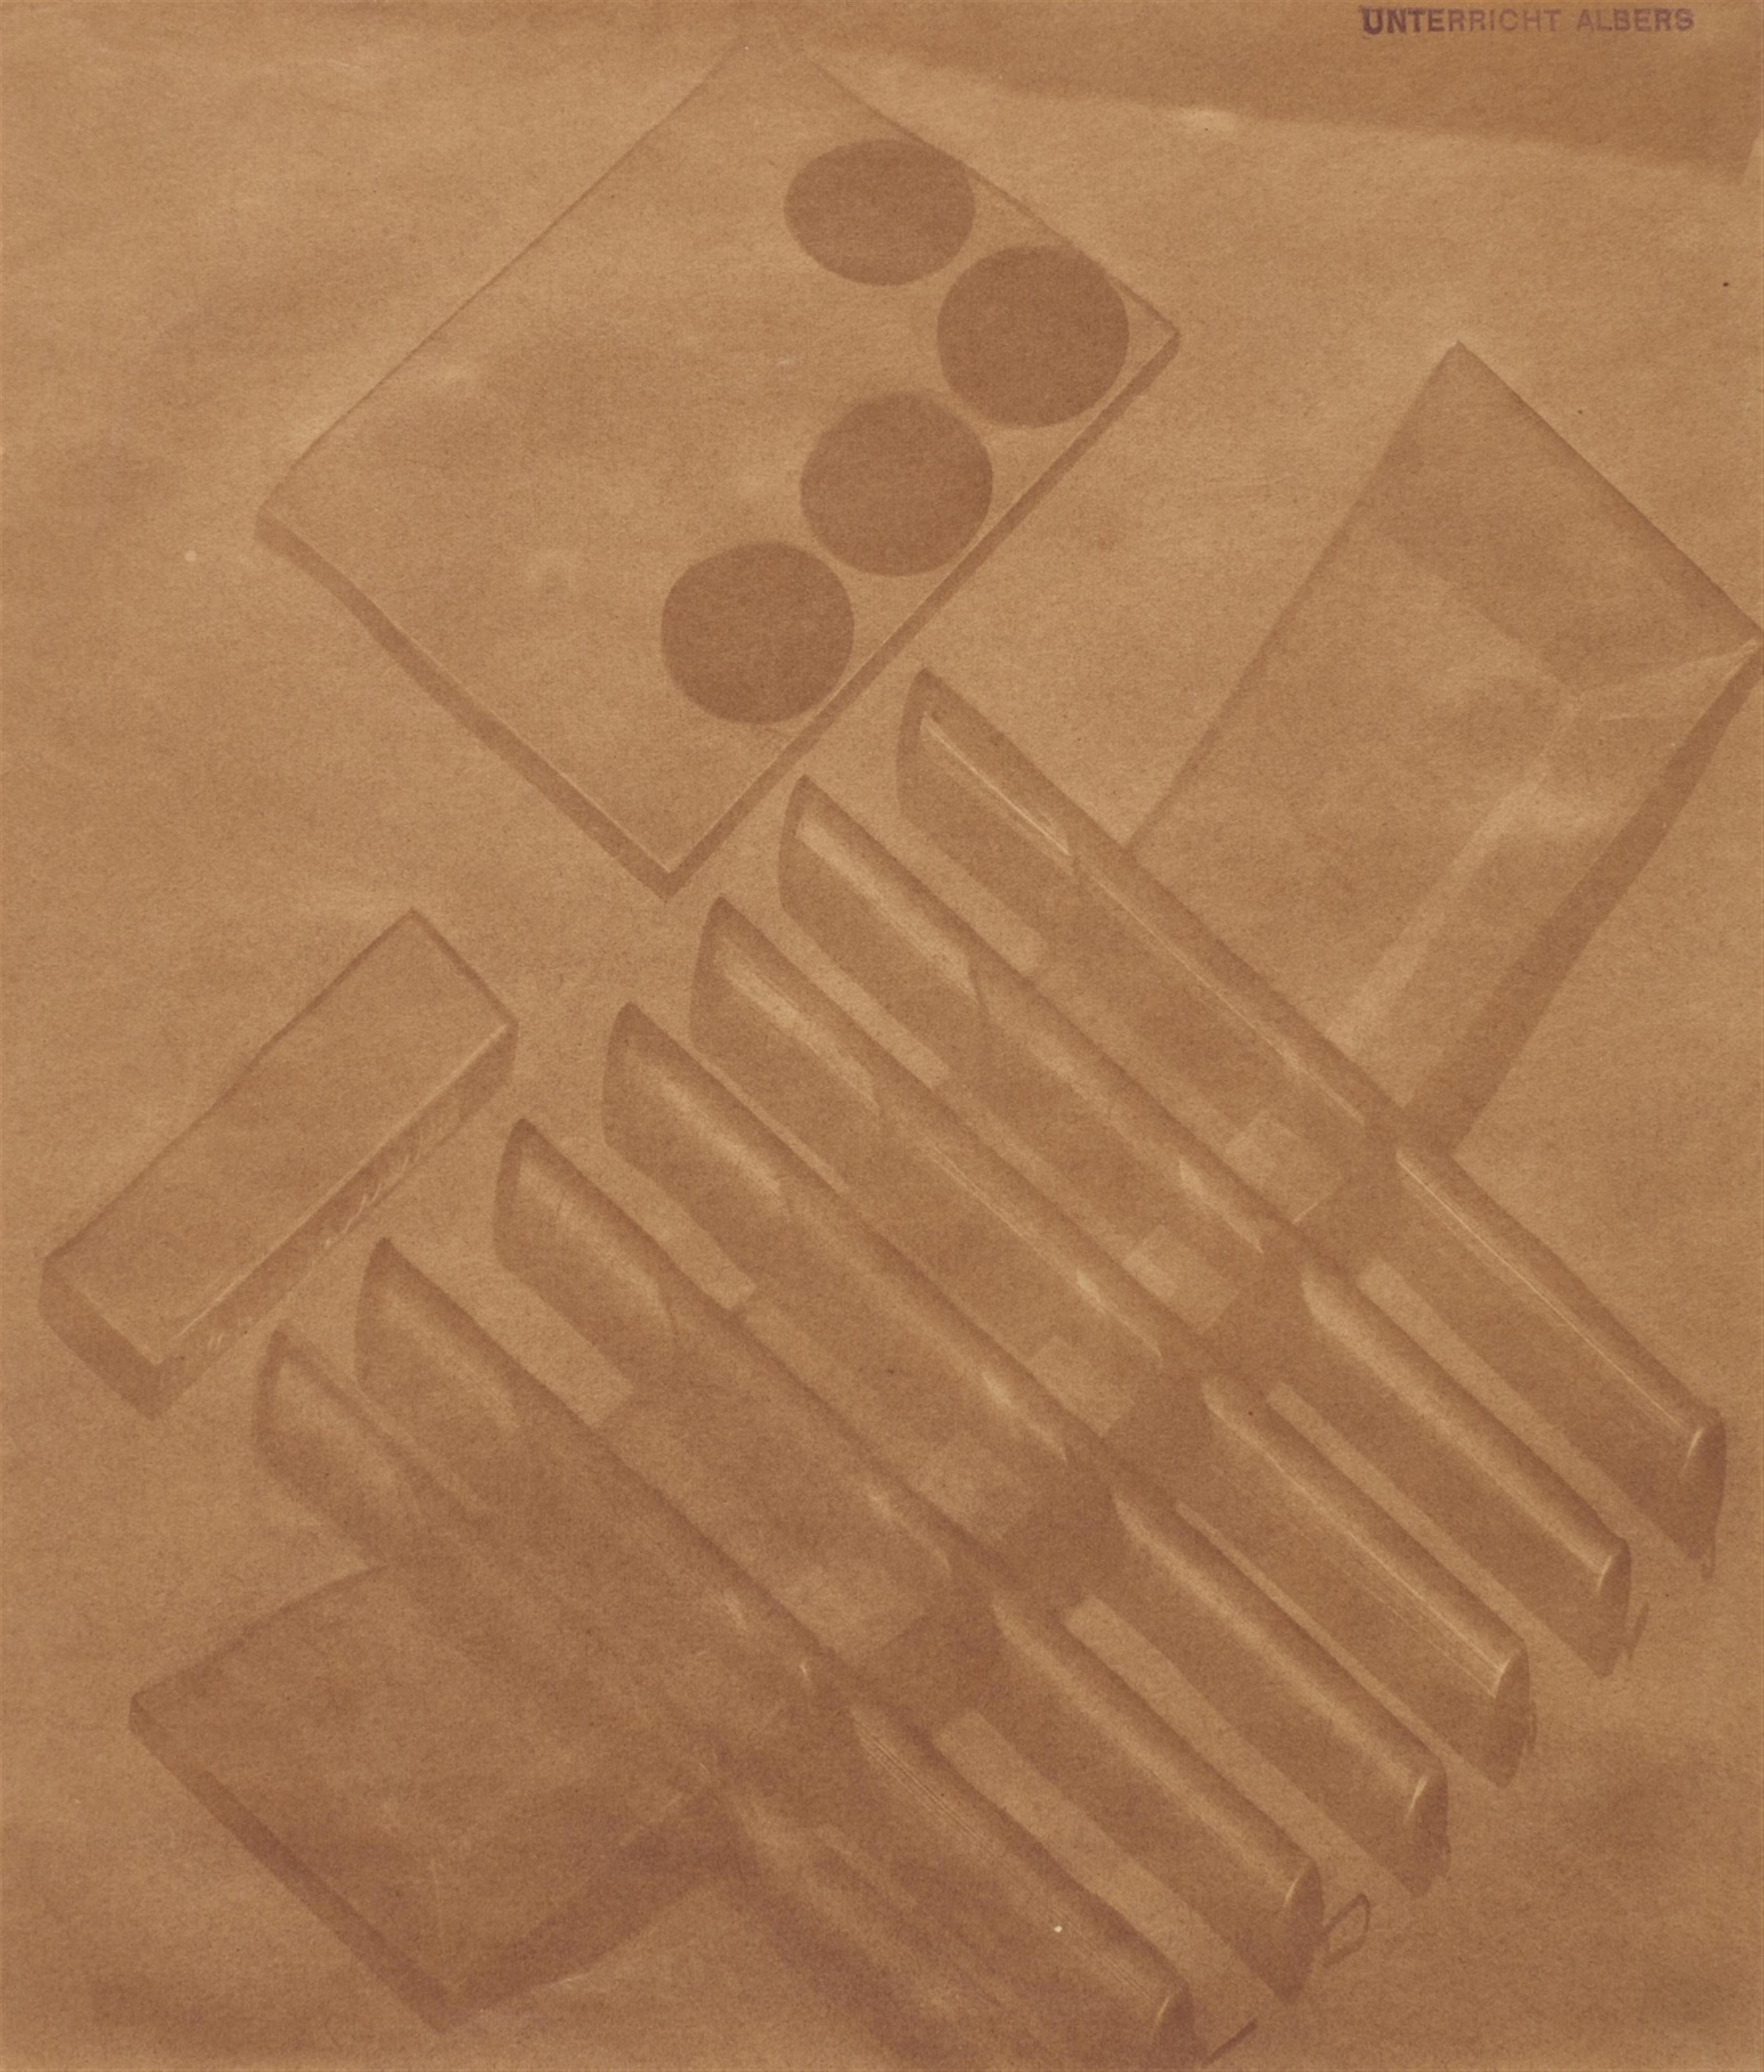 Bauhaus photography - Untitled (Study of a Bauhaus student, class of Josef Albers) - image-1